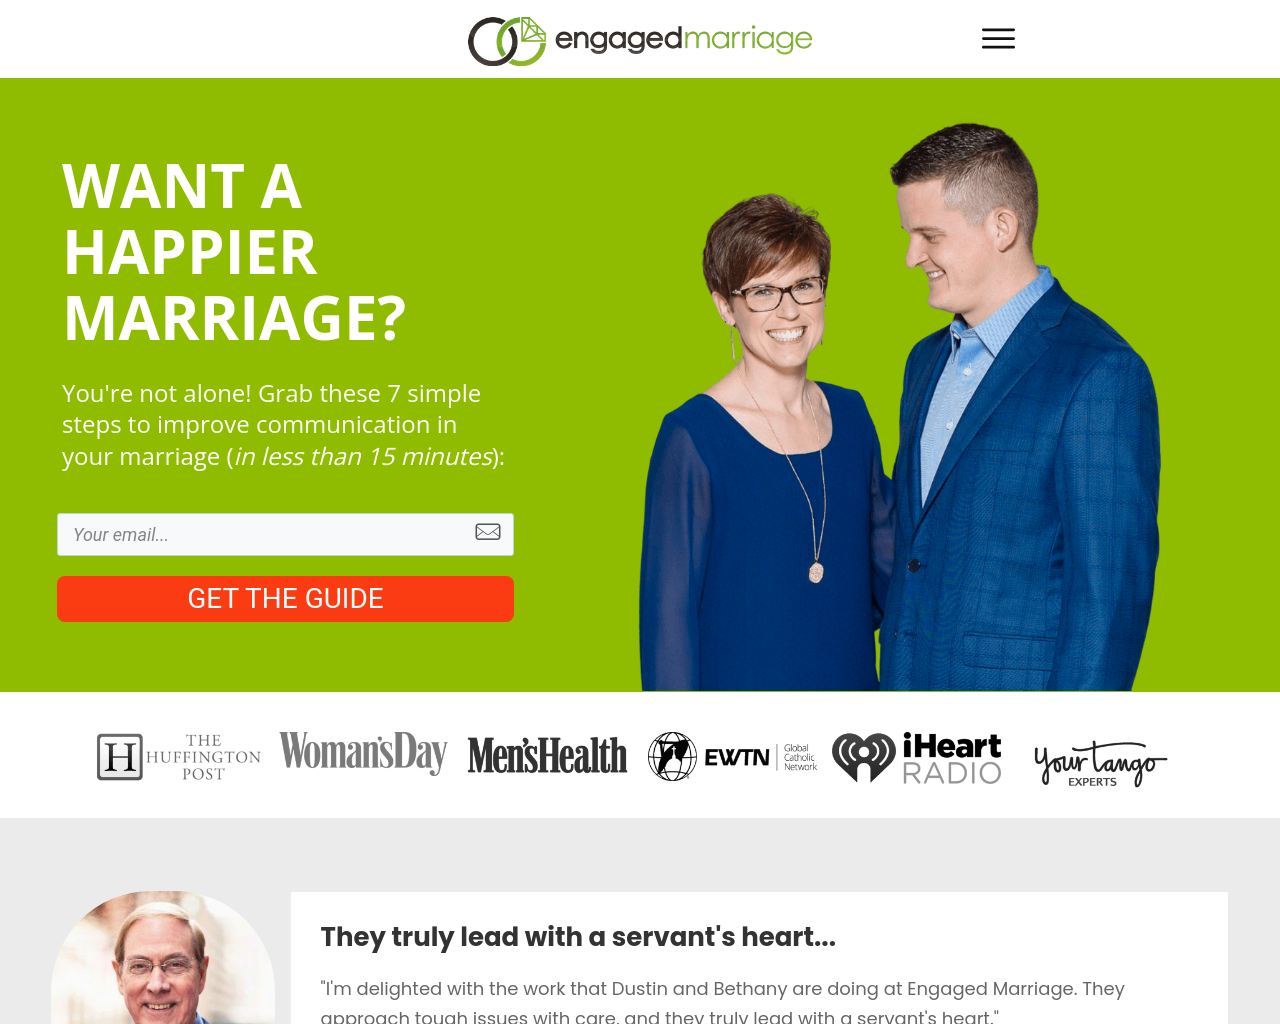 engagedmarriage.com